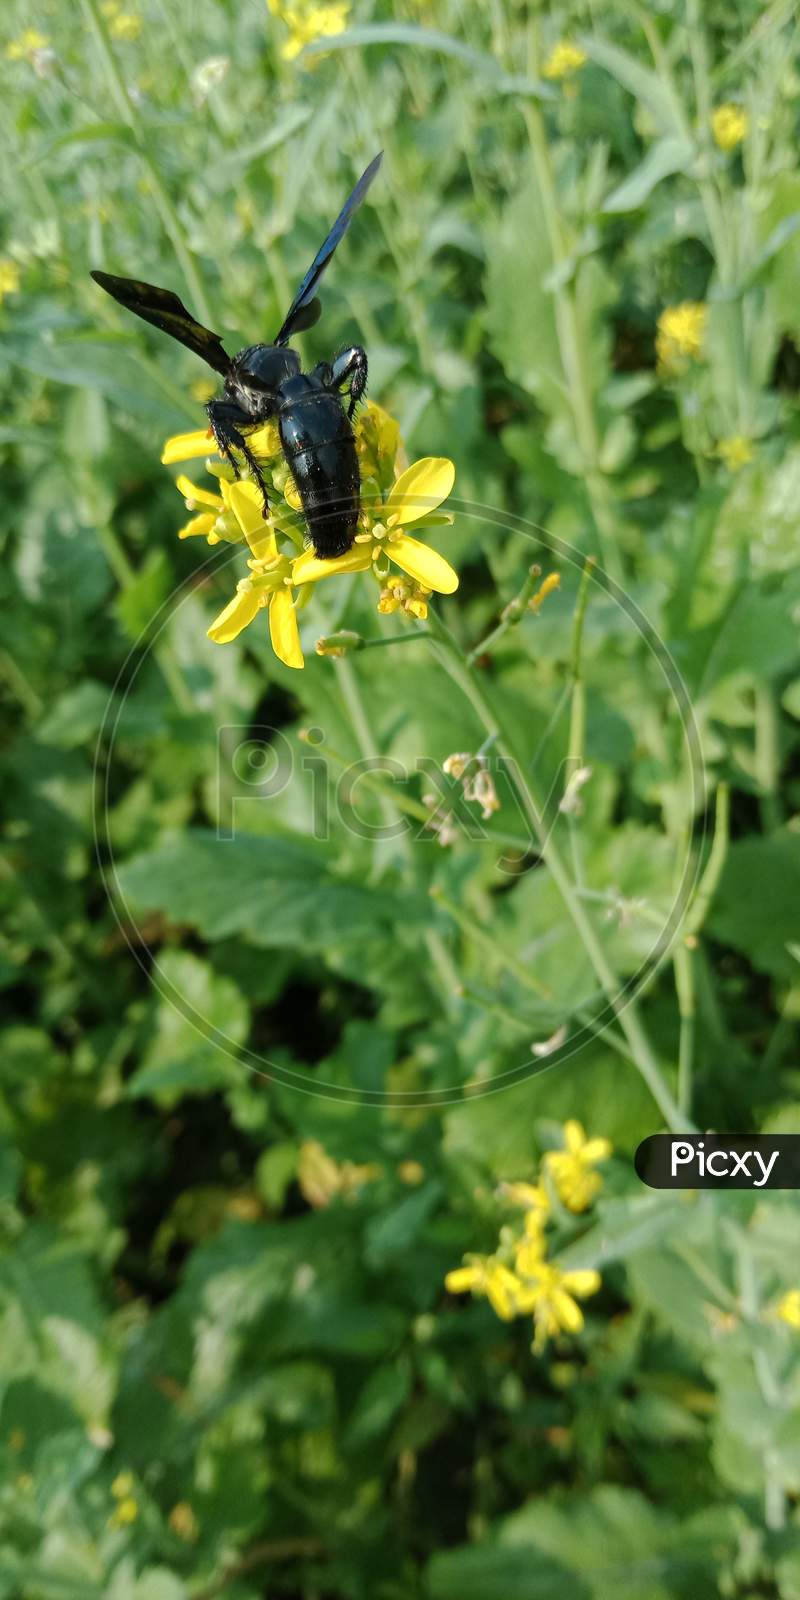 Black Honey bee on mustard flower